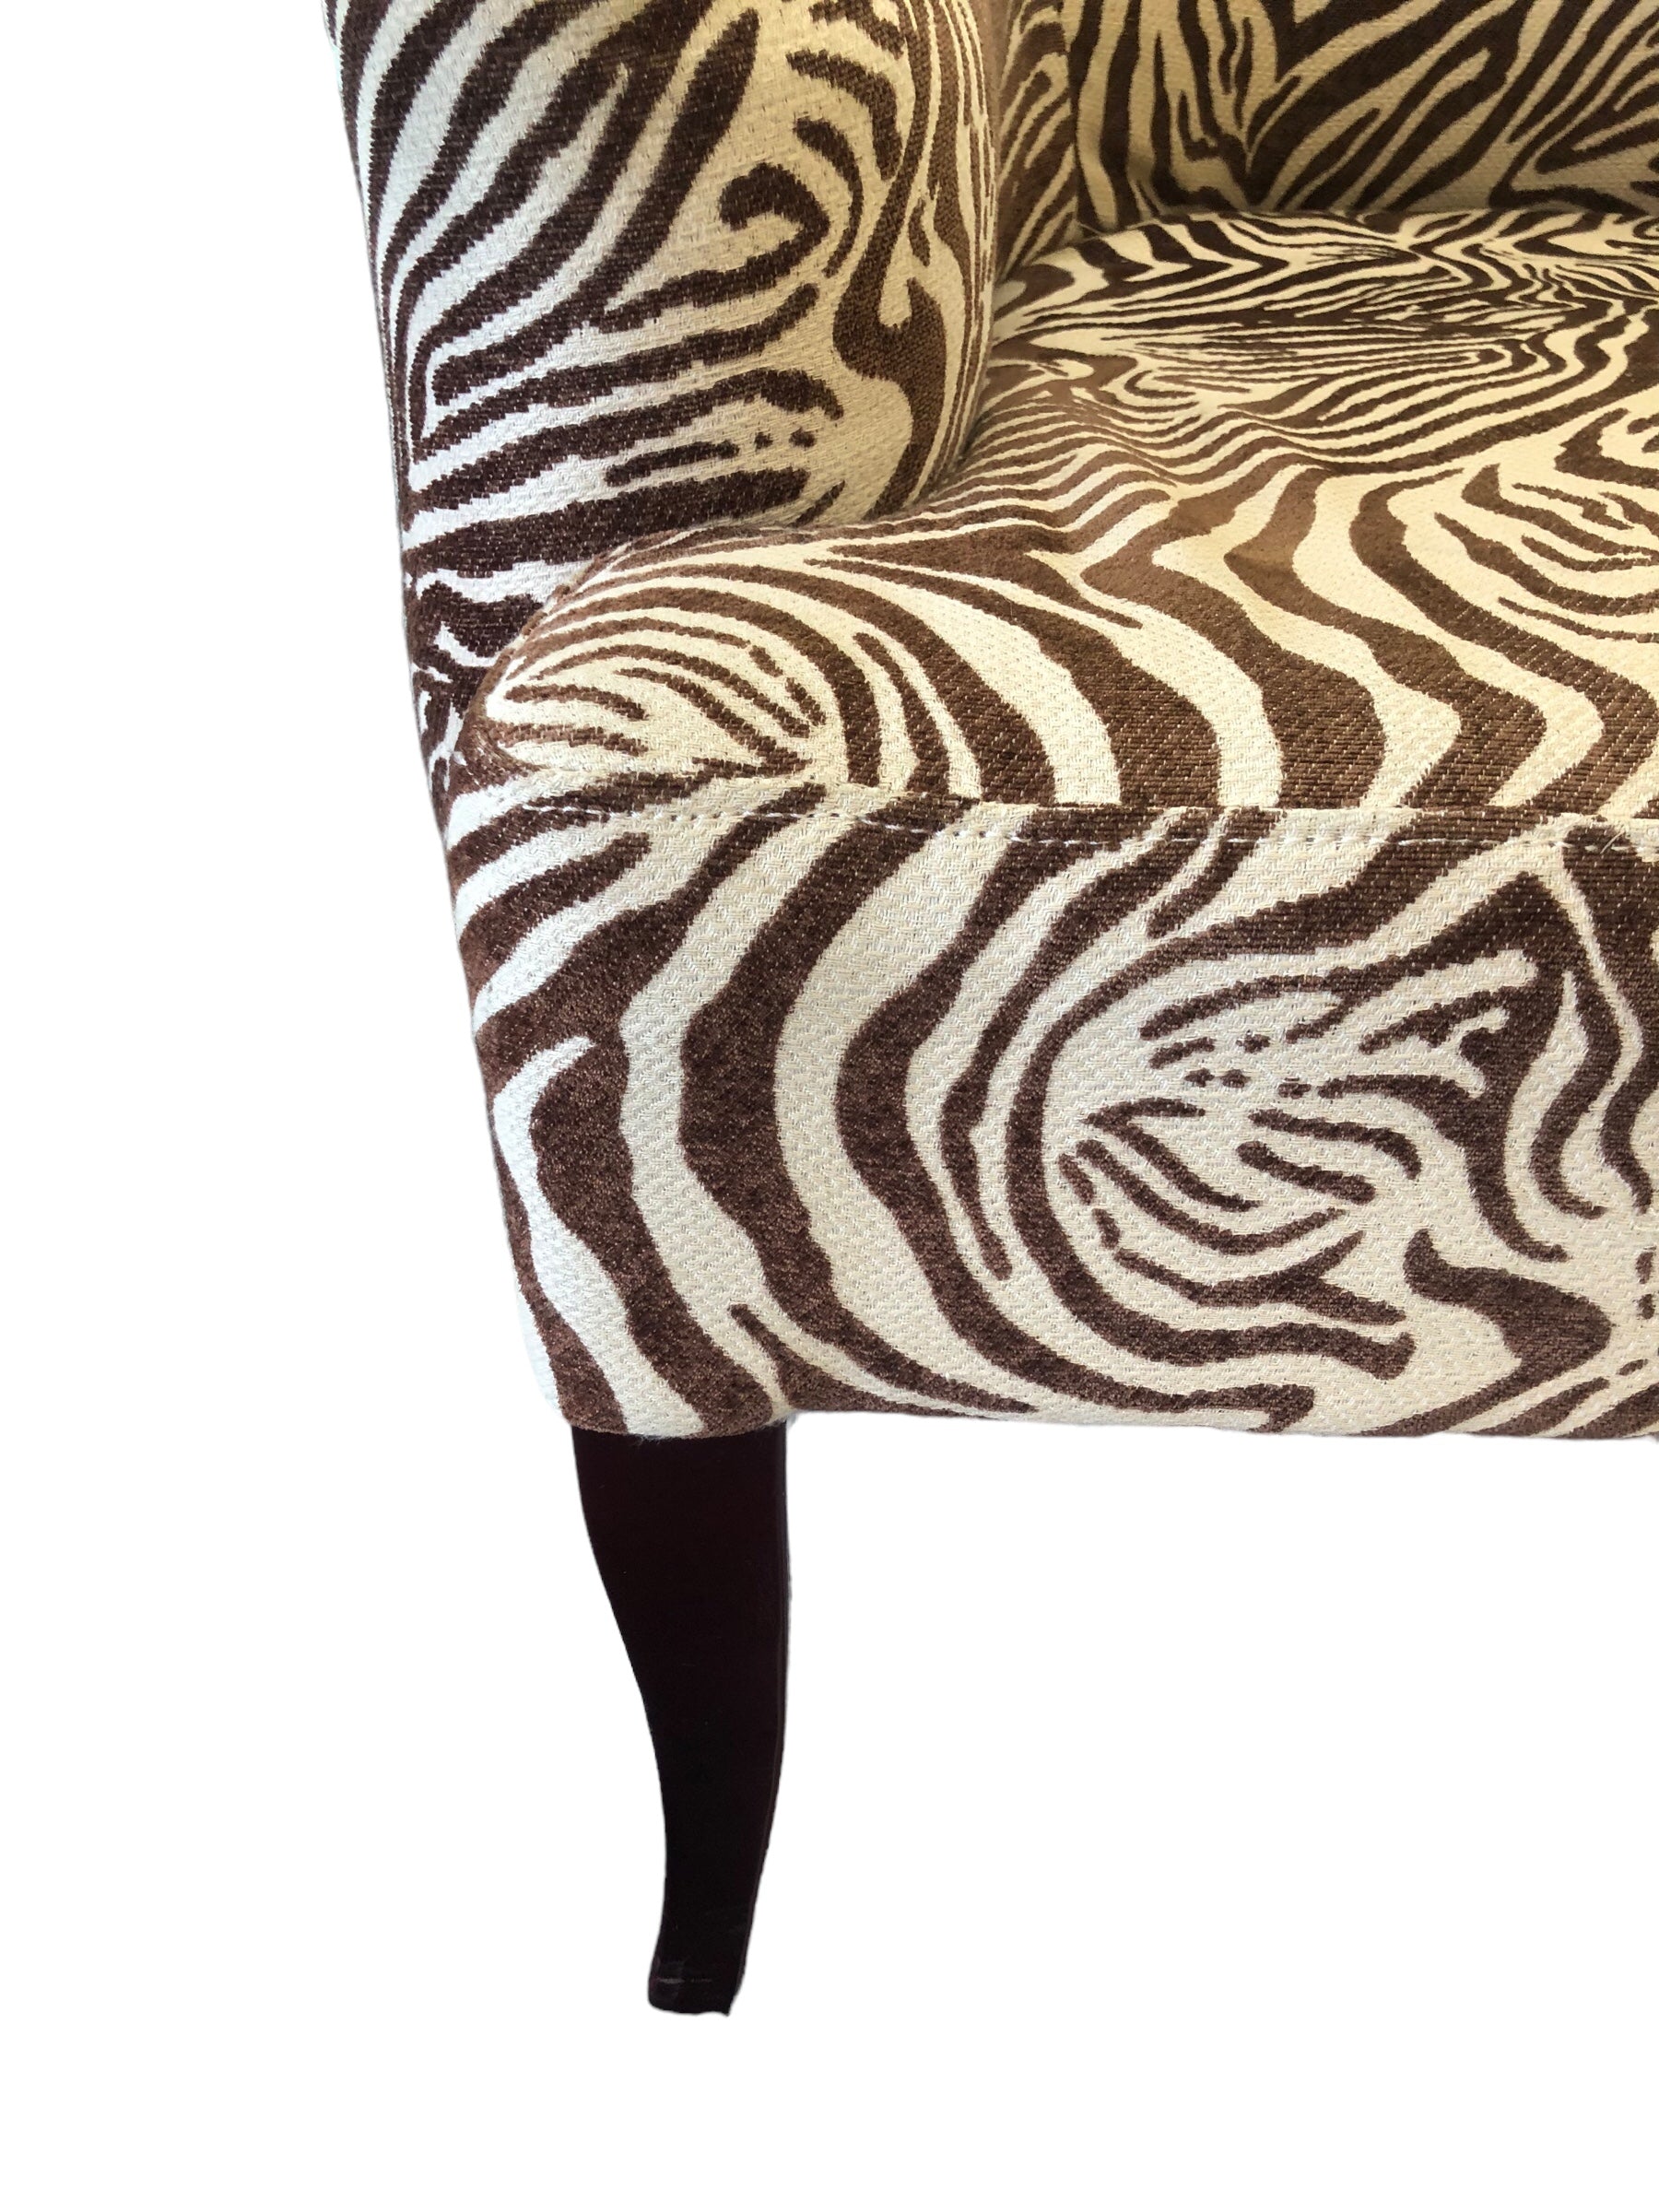 Tiger Stripe accent chair (Earthtone)